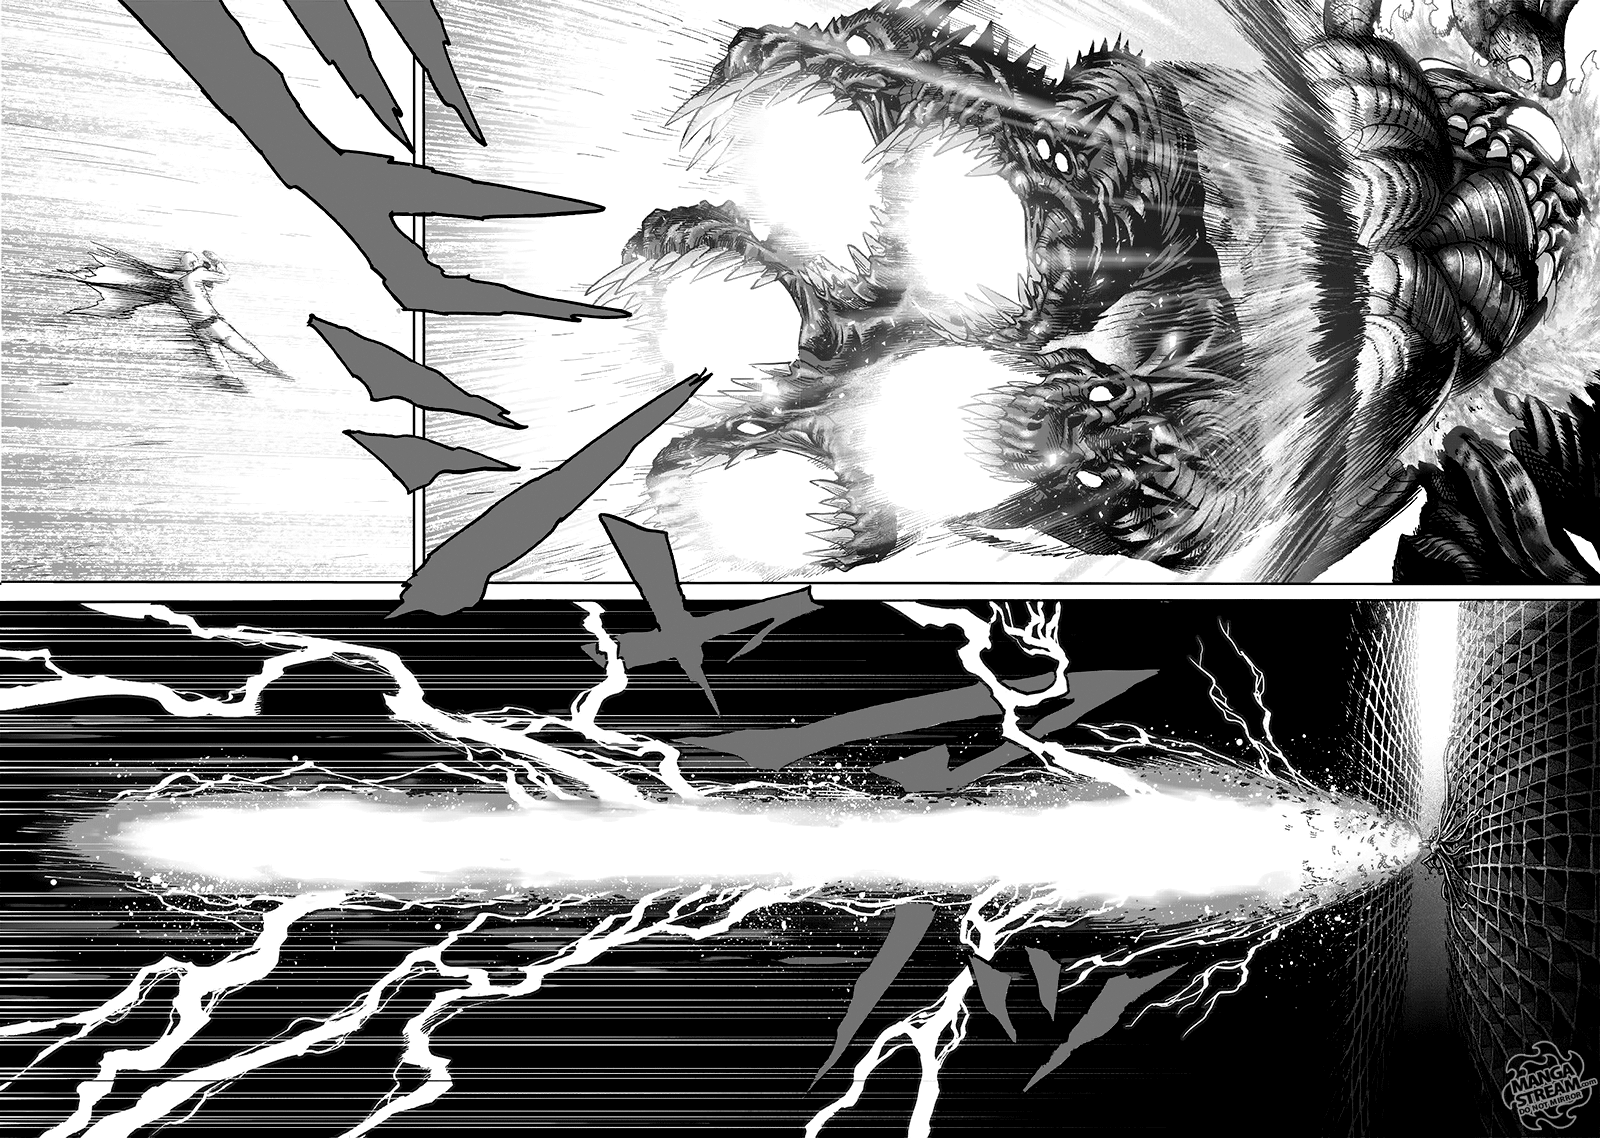 One Punch Man, Chapter 108 - Orochi vs. Saitama image 22